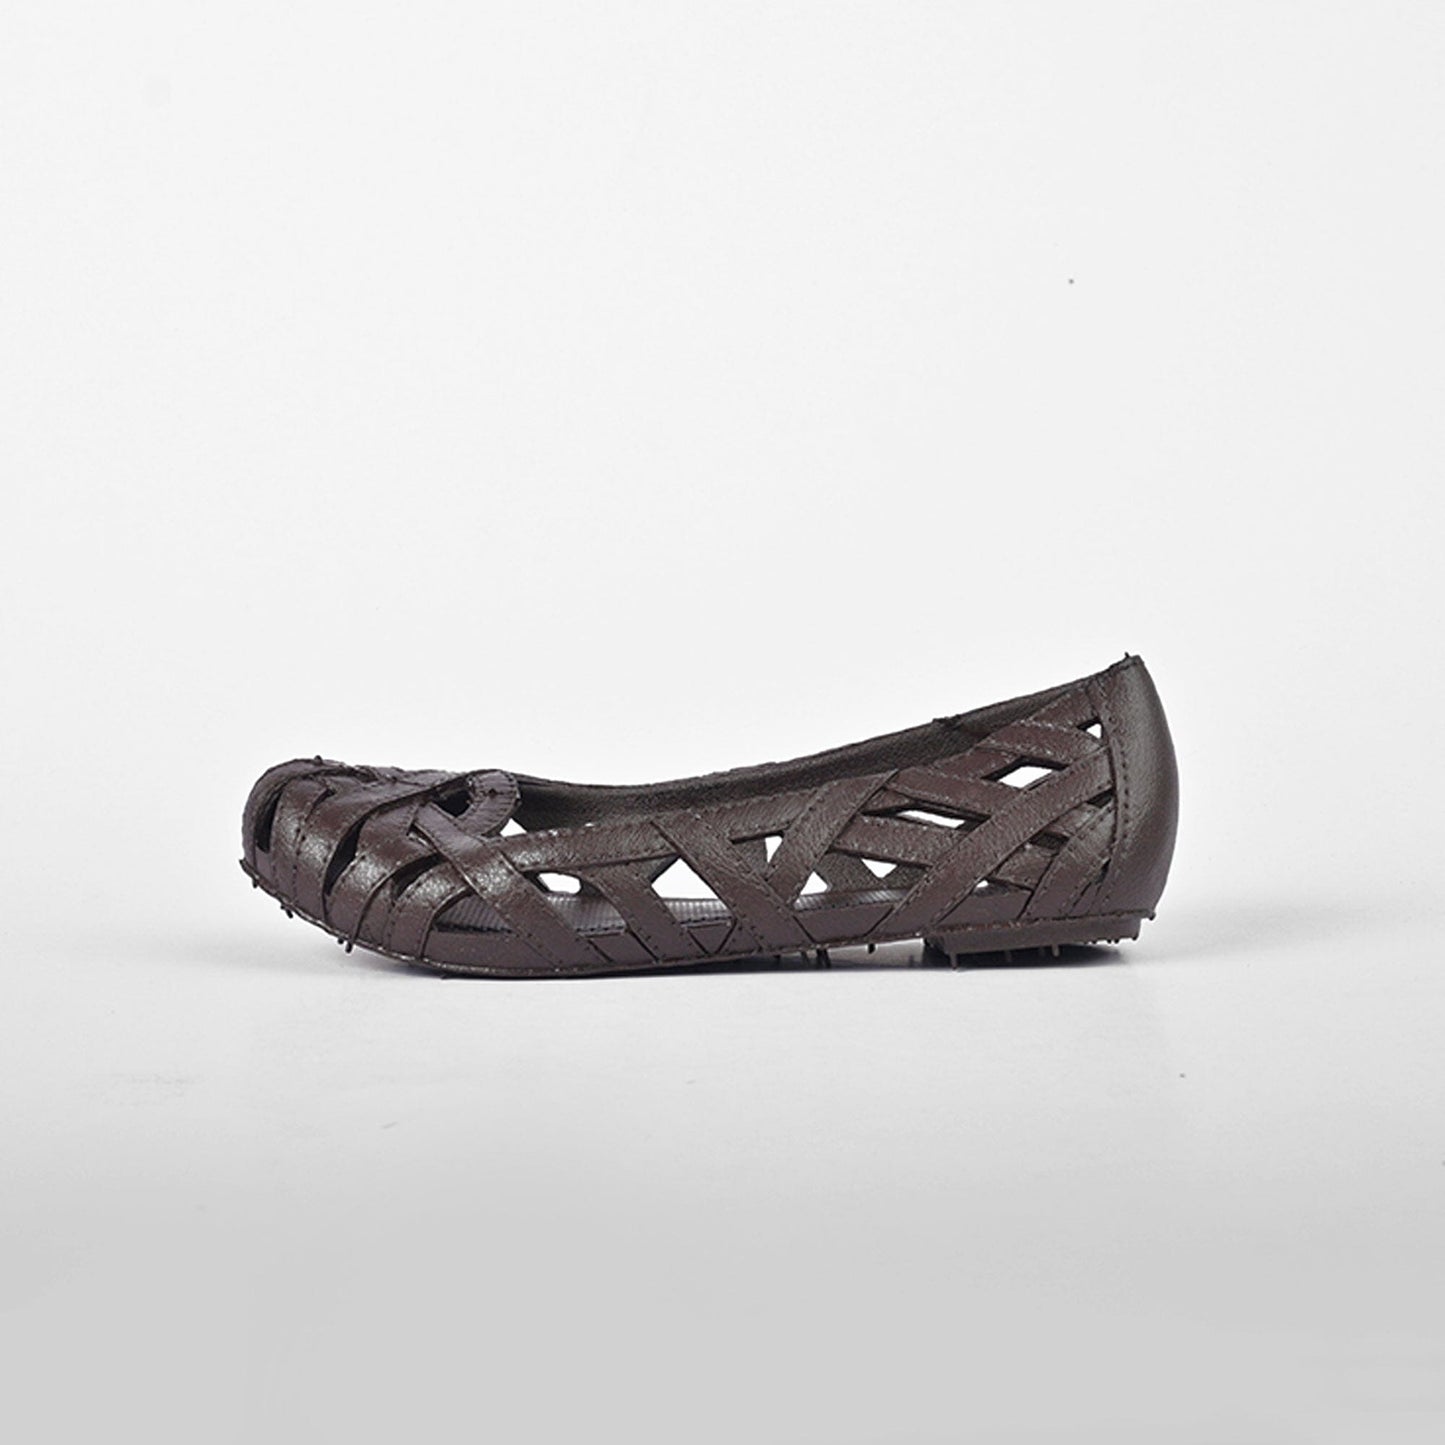 Tata Girl's Striped Design Pump Shoes Girl's Shoes RAM Chocolate EUR 24 